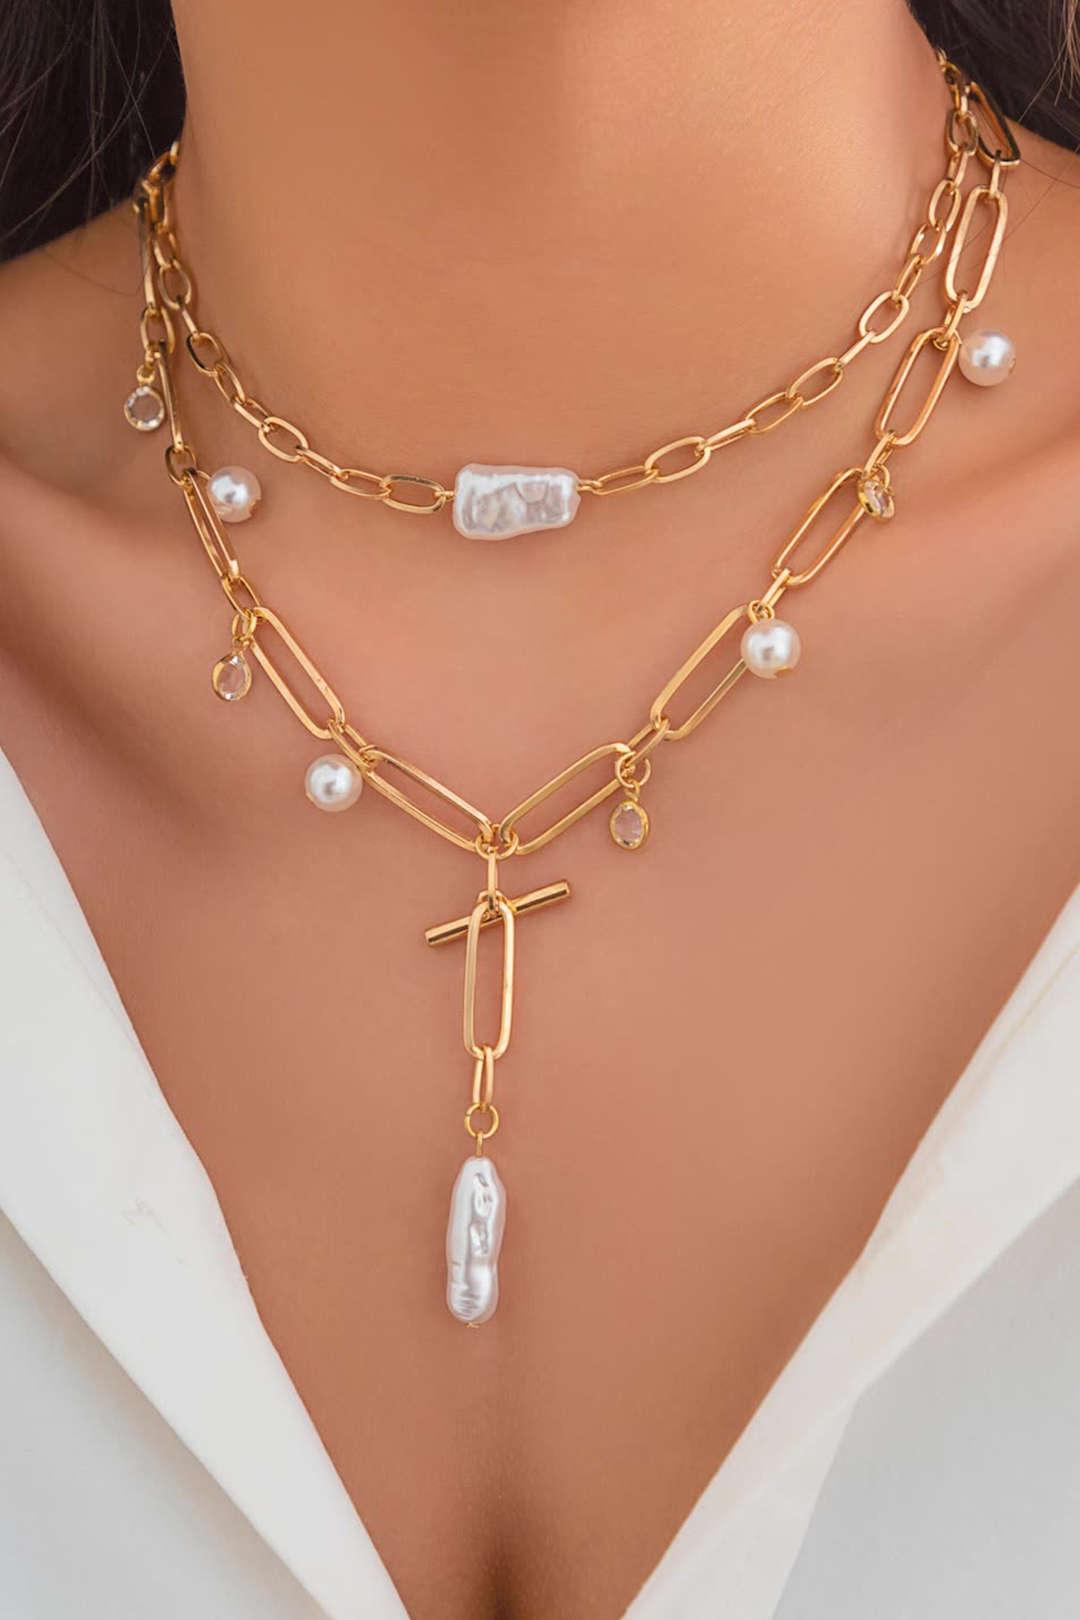 Chain & Faux Pearl Decor Pendant Necklace